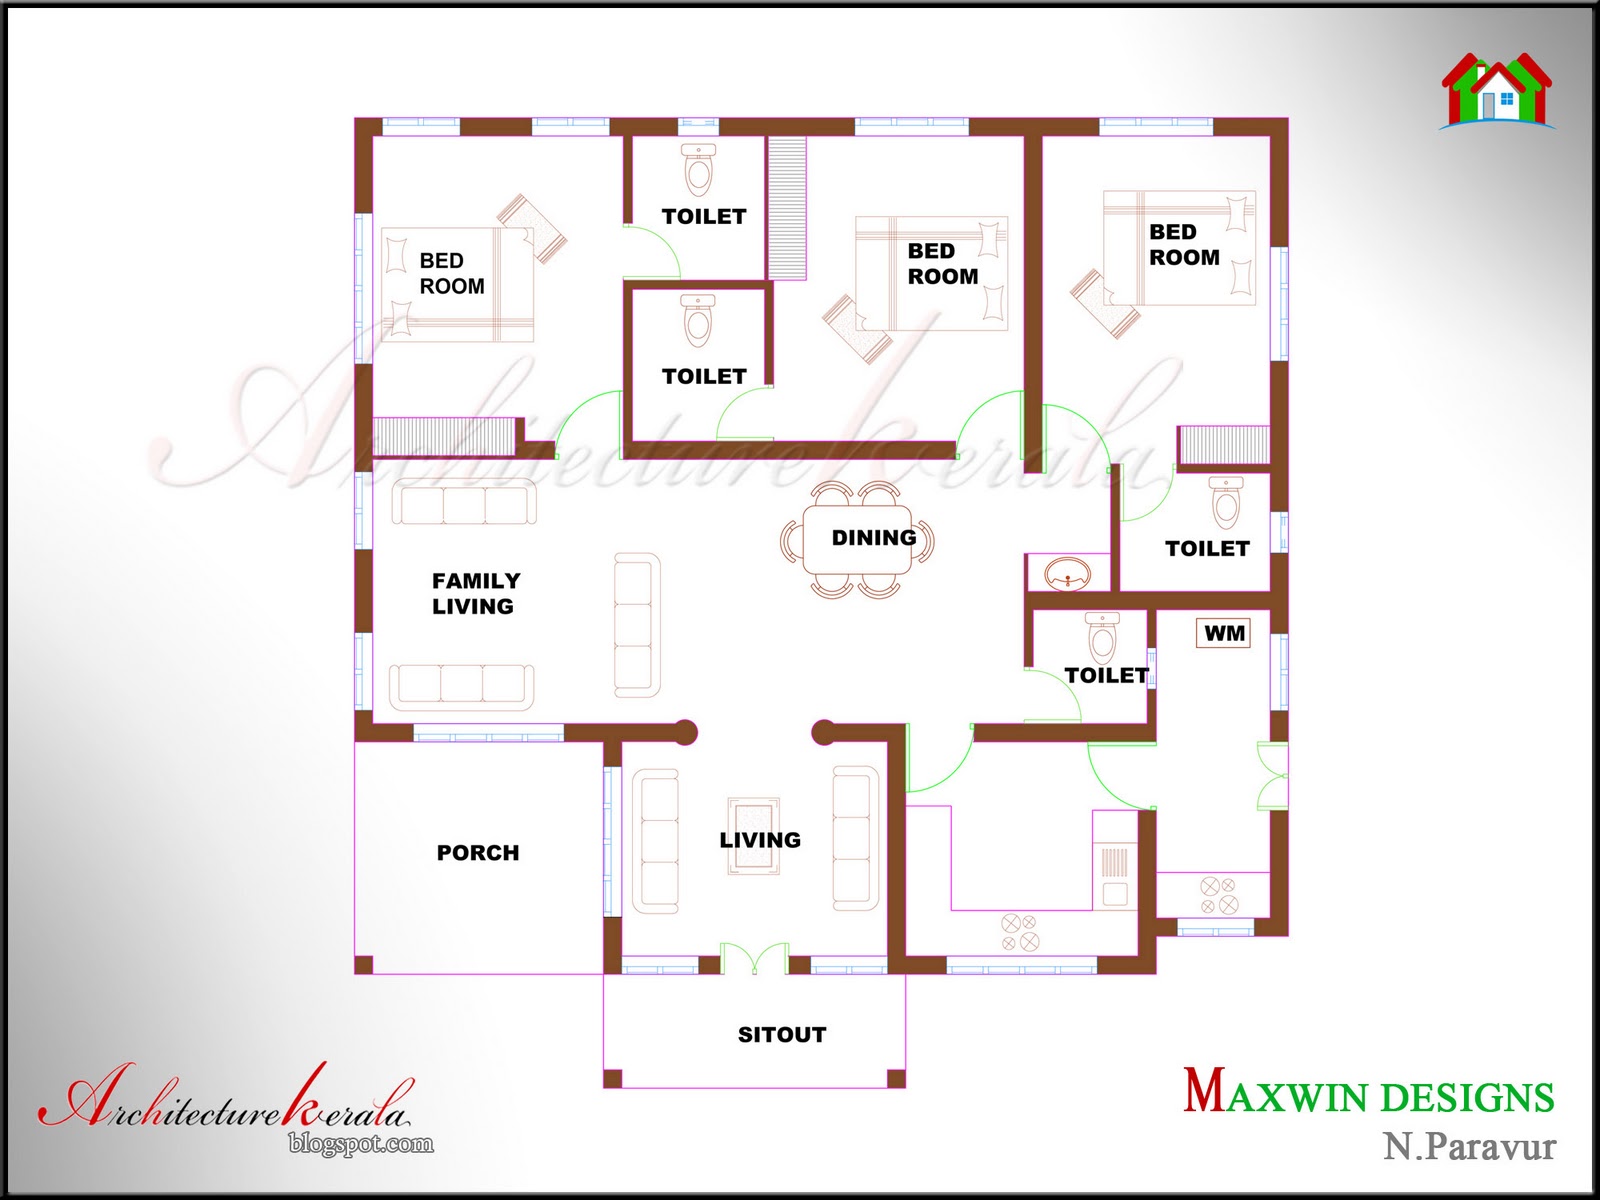 4 Bedroom House Plans Kerala Style